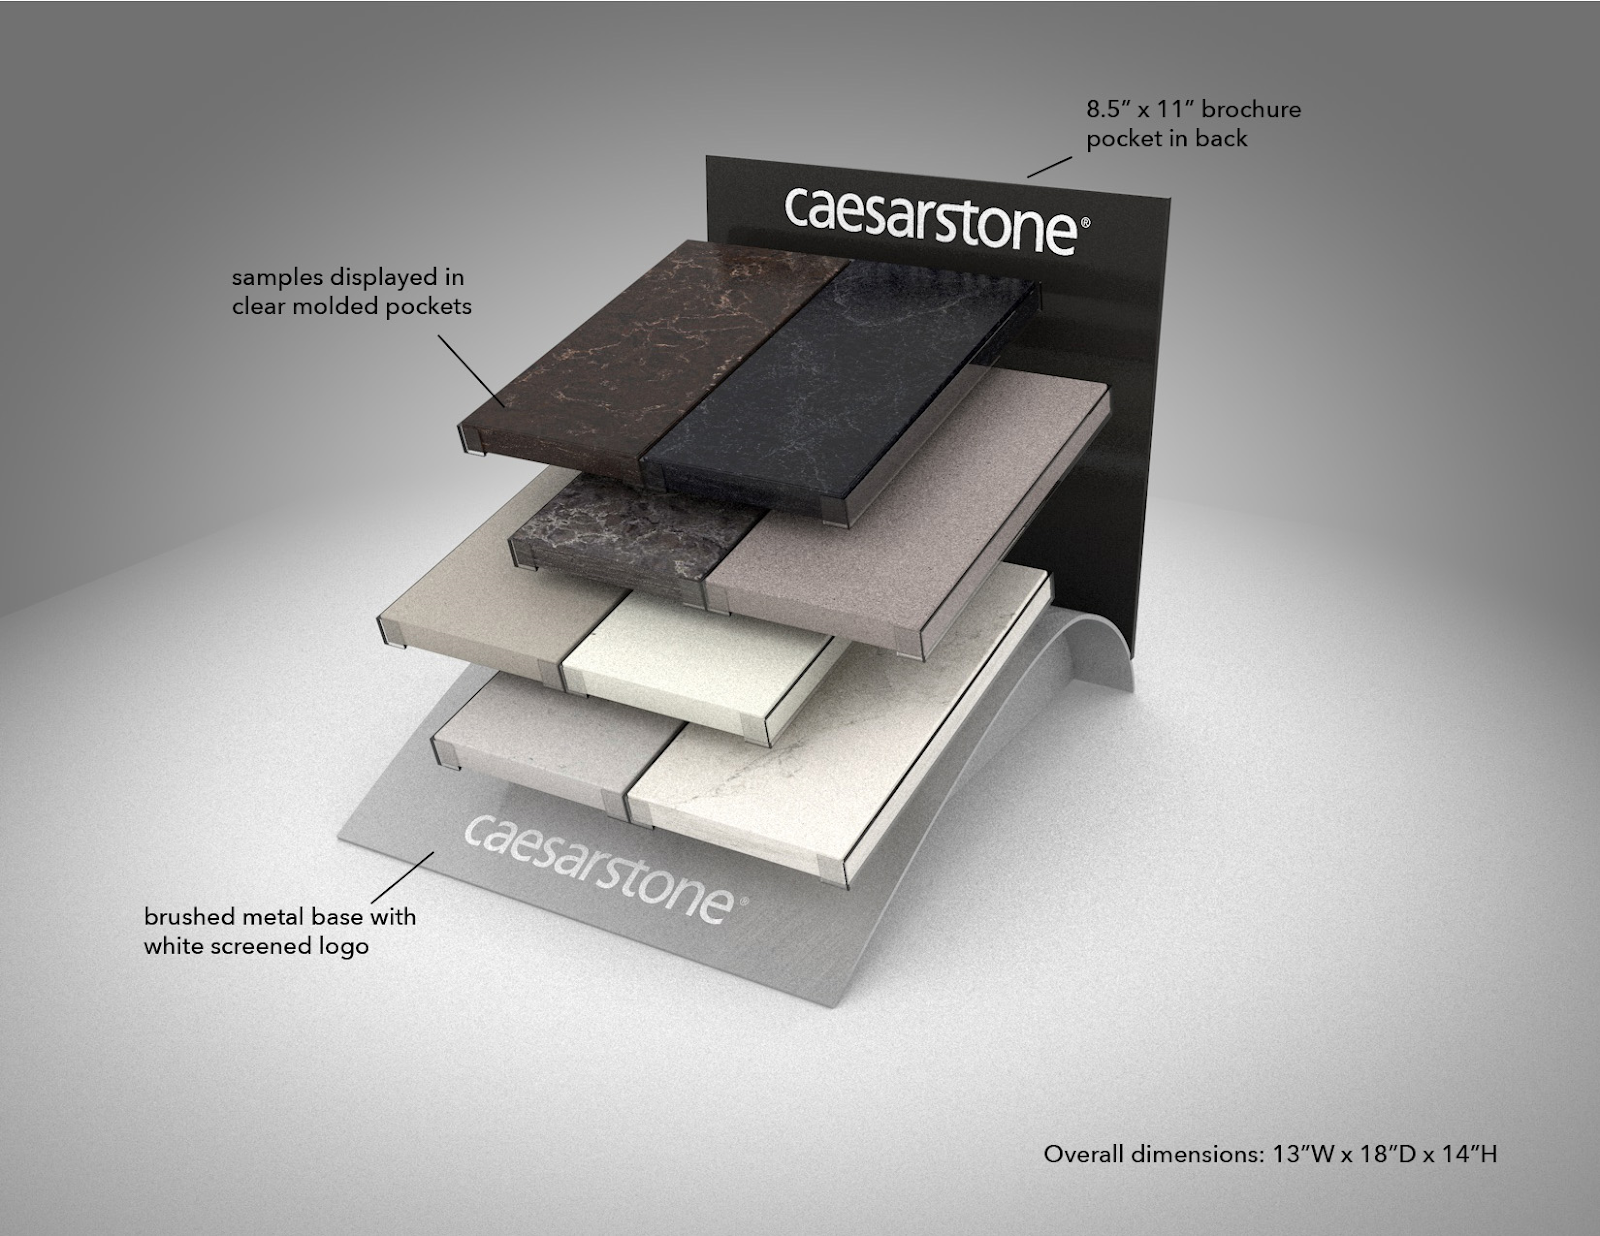 Caesarstone custom POP countertop display